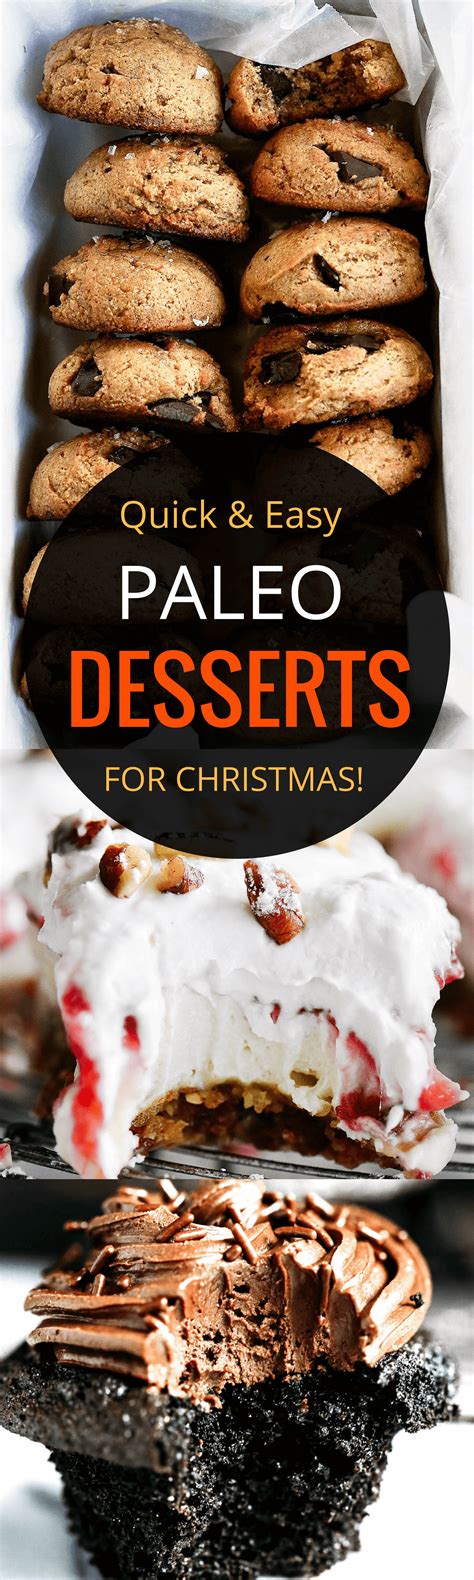 paleo desserts for christmas 50 guilt free gluten free paleo recipes PDF